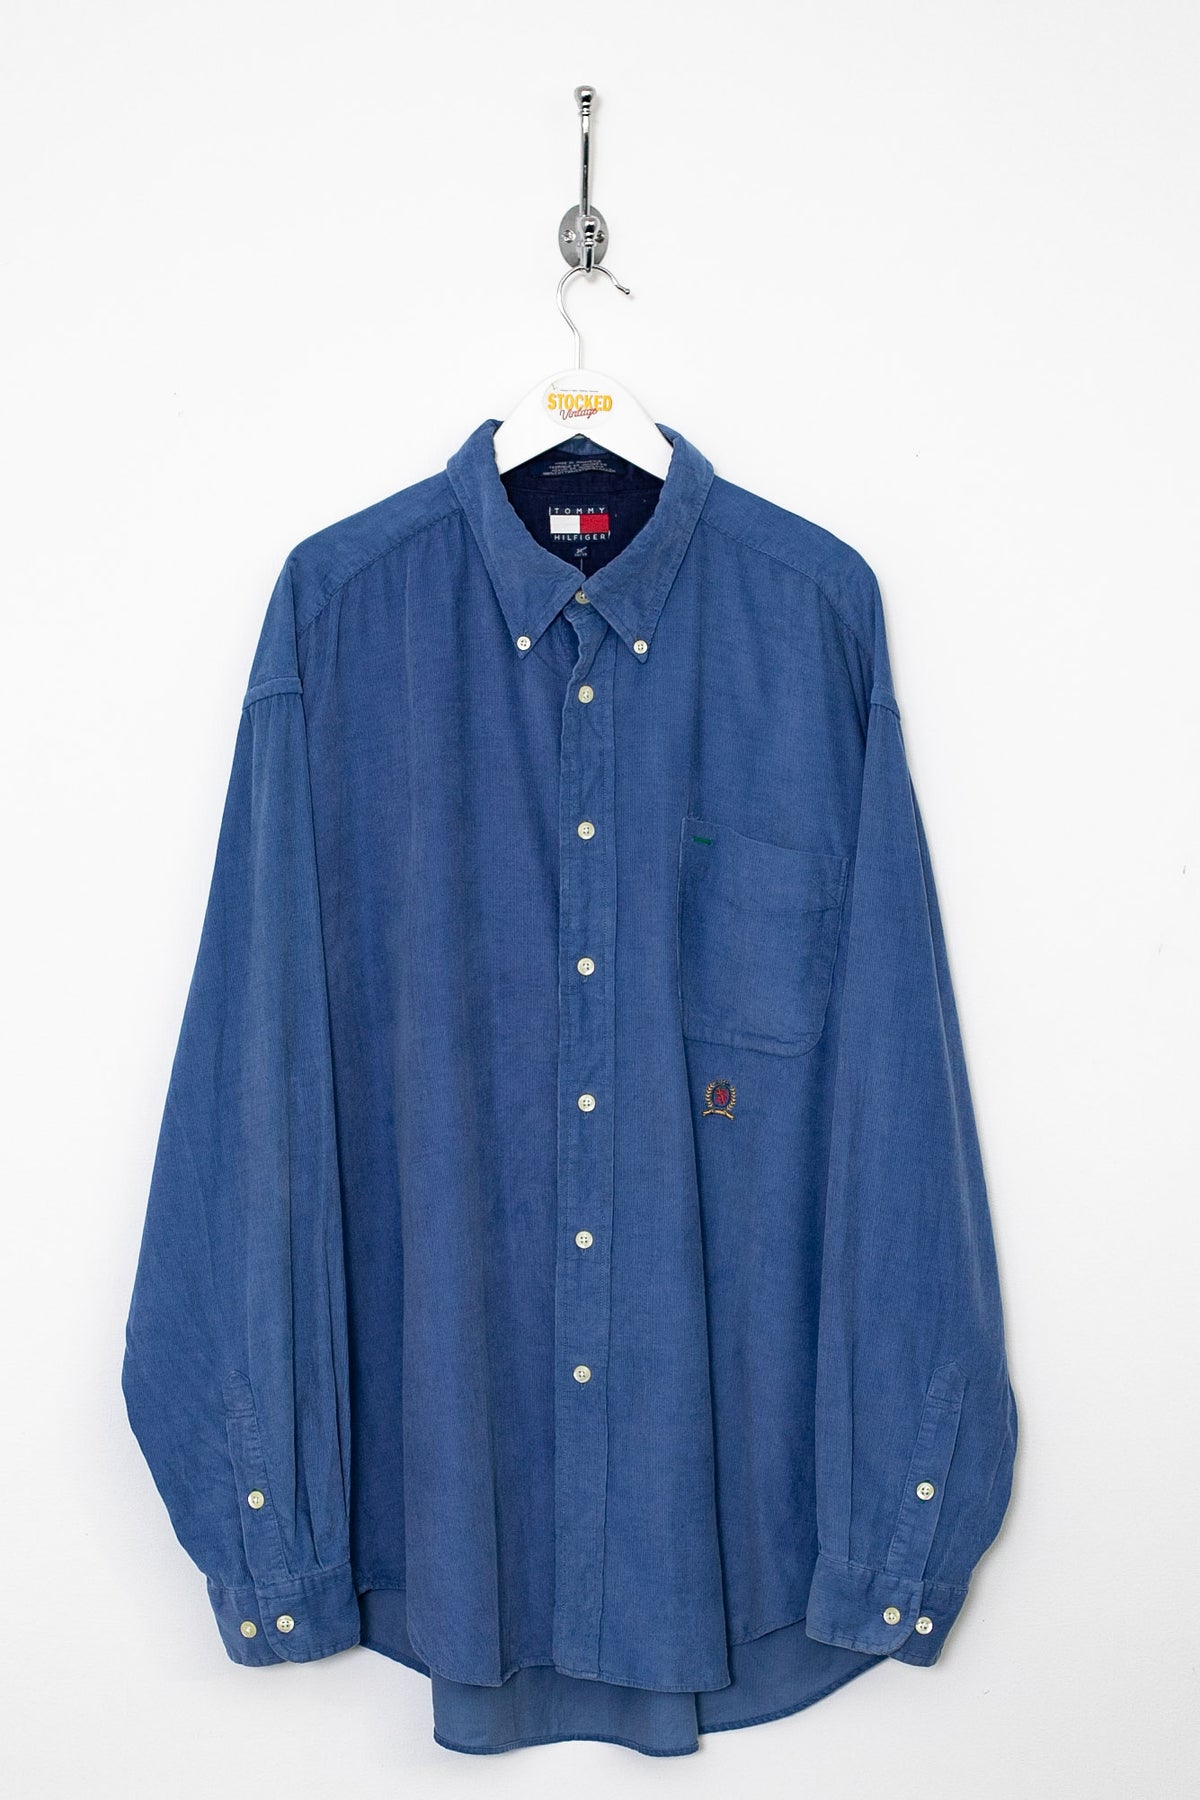 90s Tommy Hilfiger Corduroy Shirt (XL)